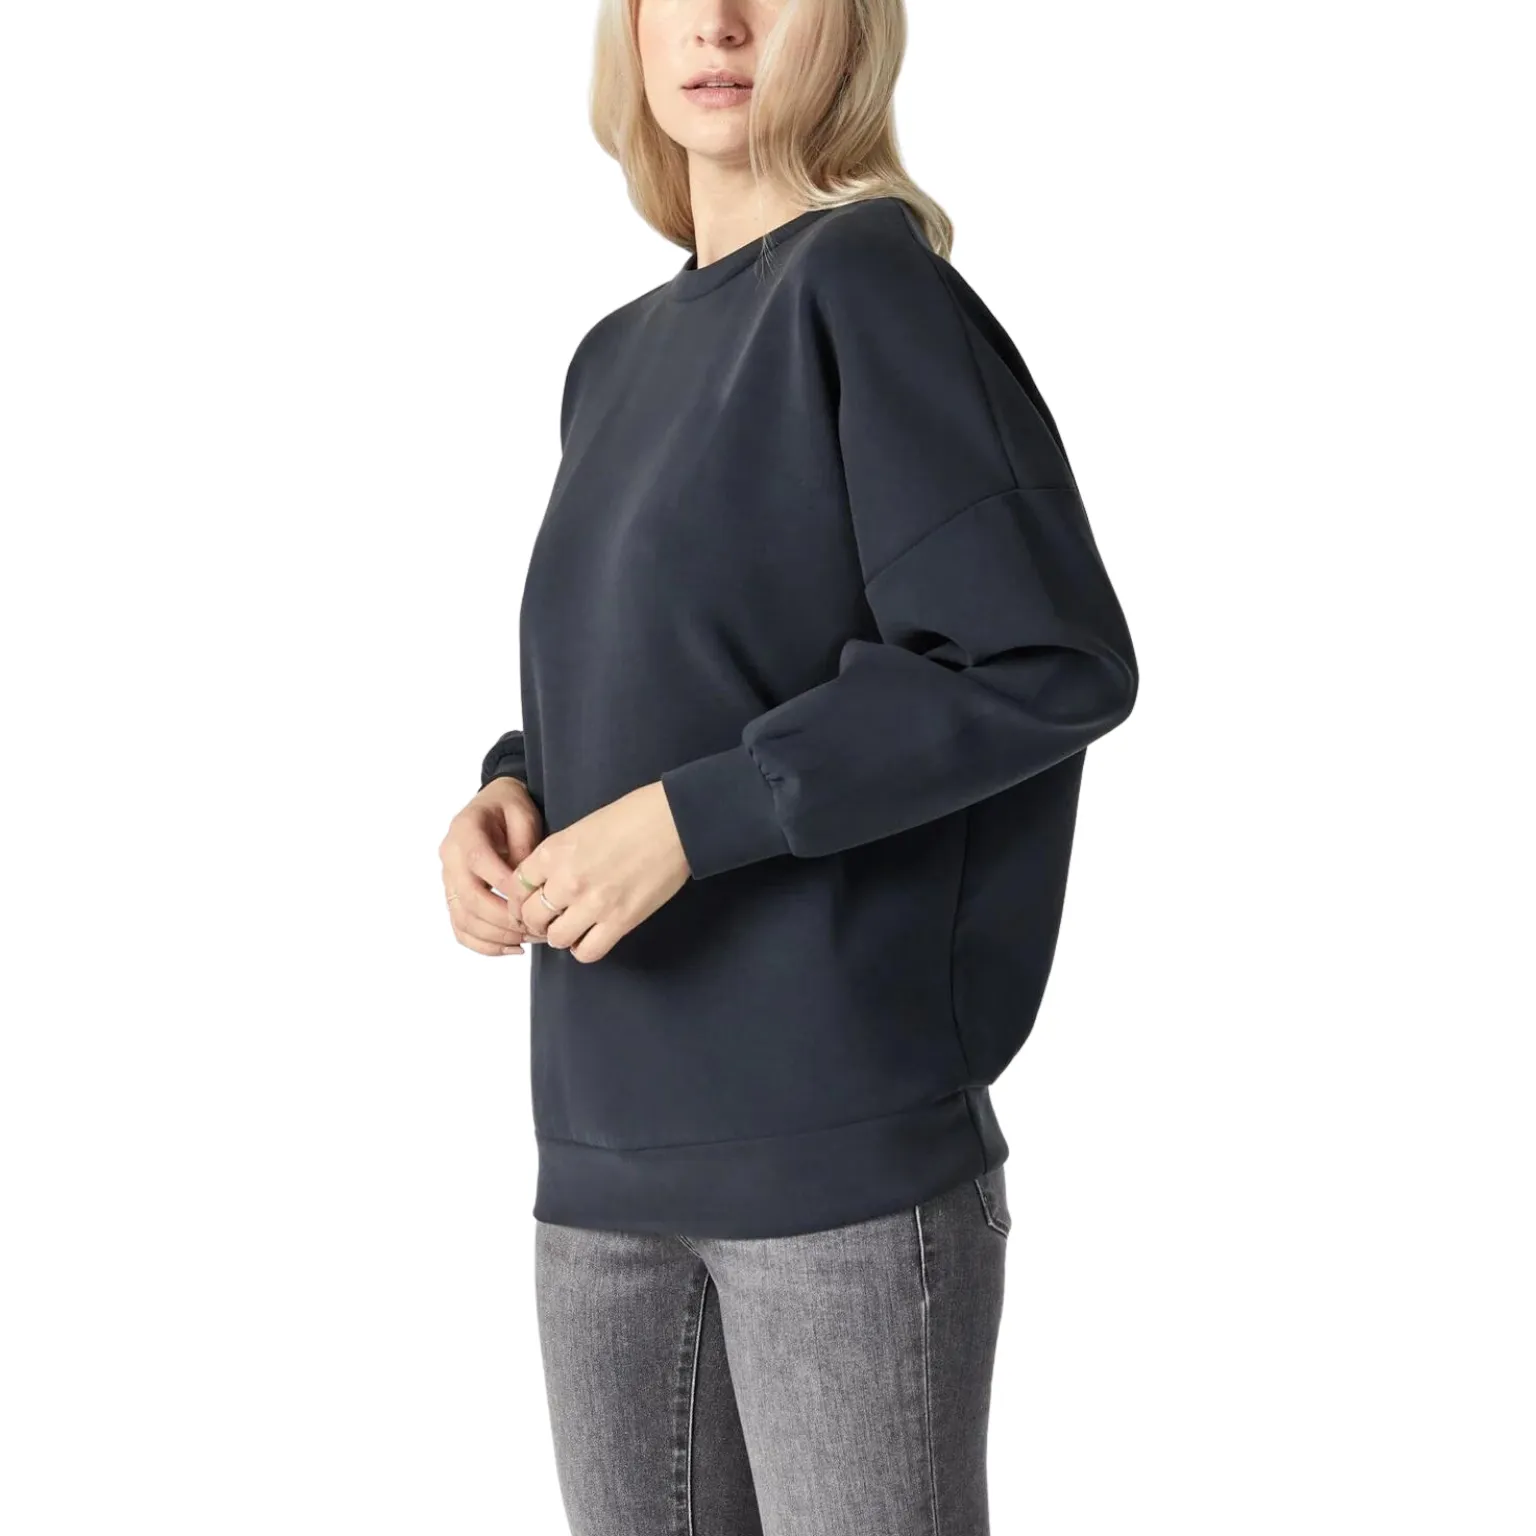 Women's Sweatshirt manufacturing with trendy design